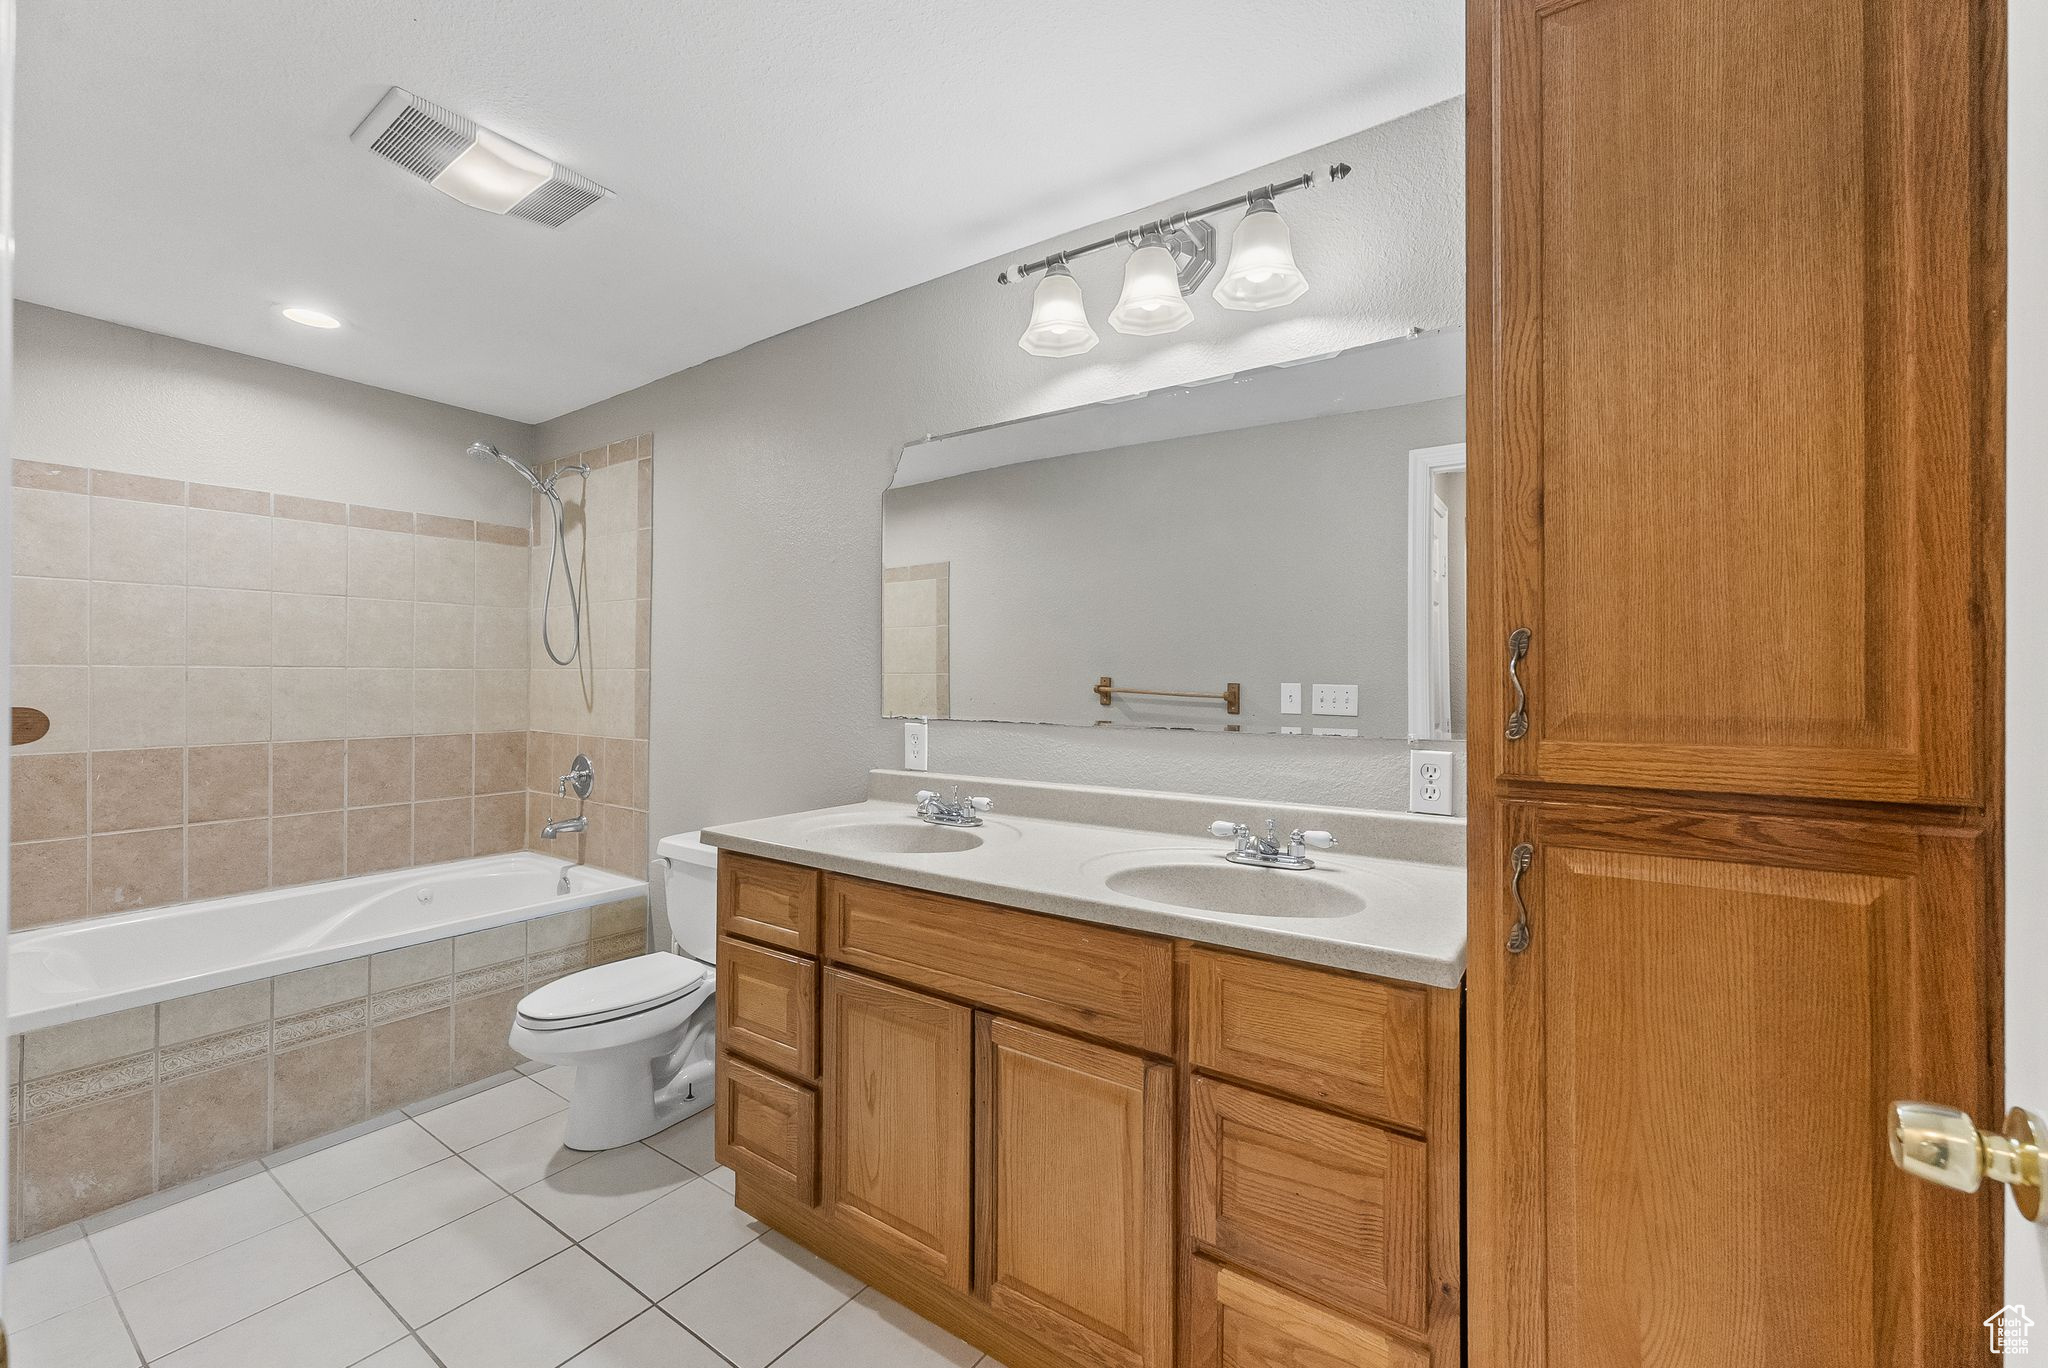 Full bathroom with tiled shower / bath, toilet, tile floors, and double sink vanity